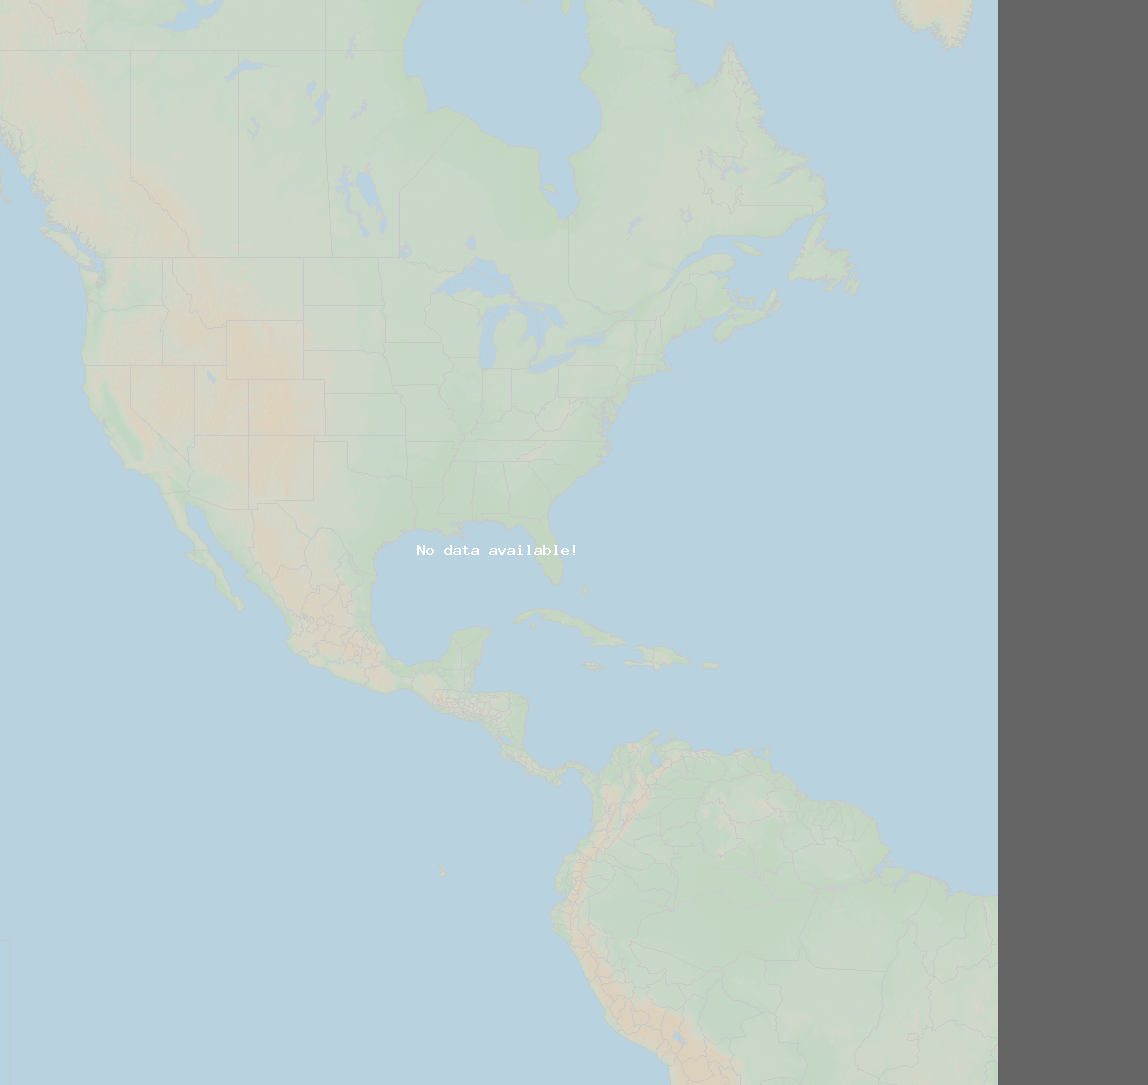 Andel blixtar (Station Haleakala) North America 2021 November